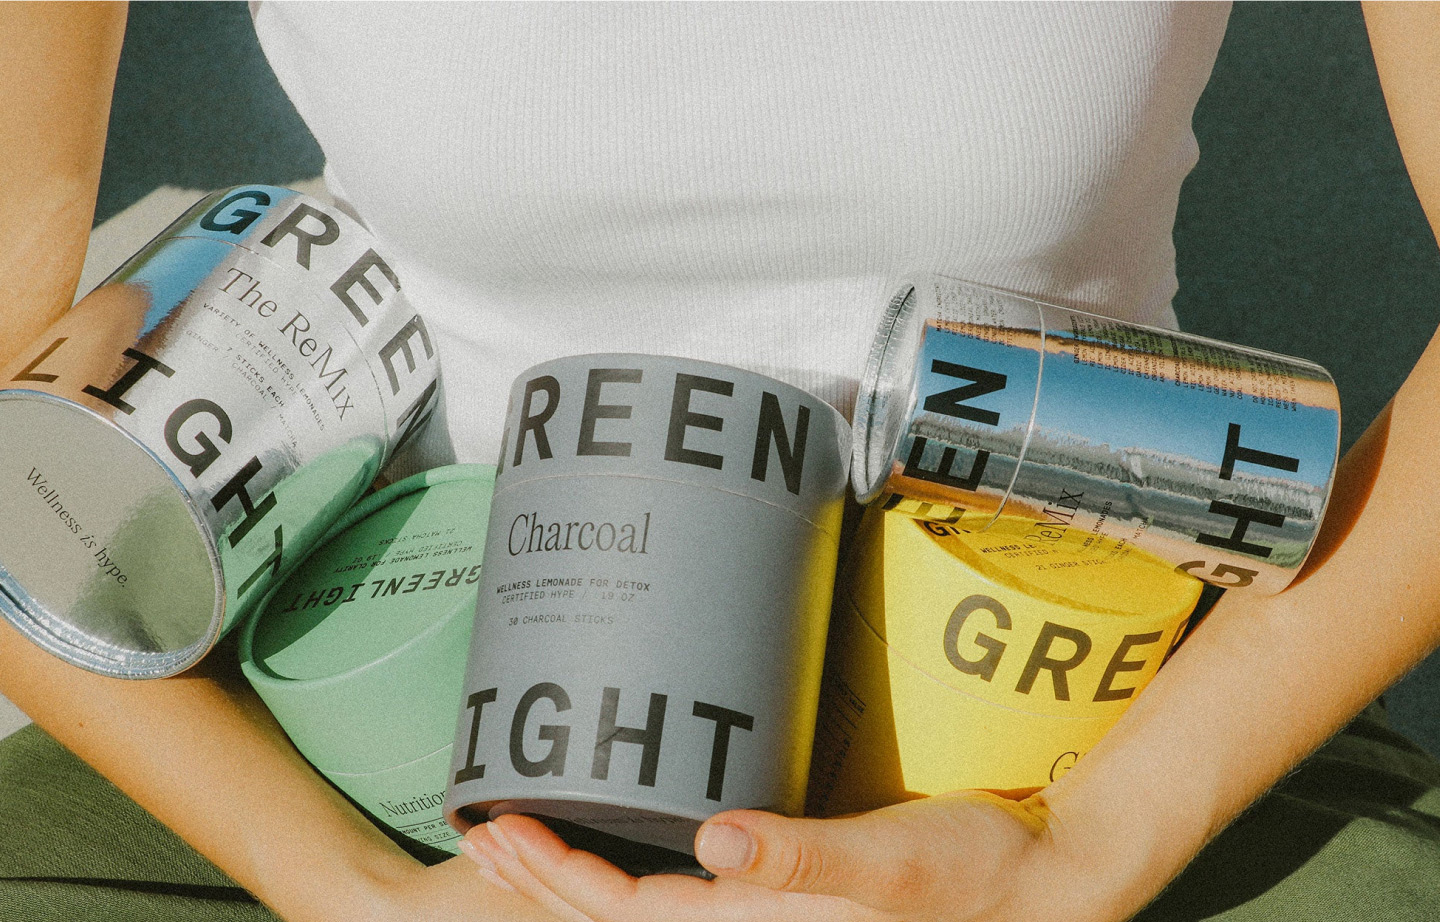 Truffl-Designed Greenlight Adds Wellness To Hype Culture